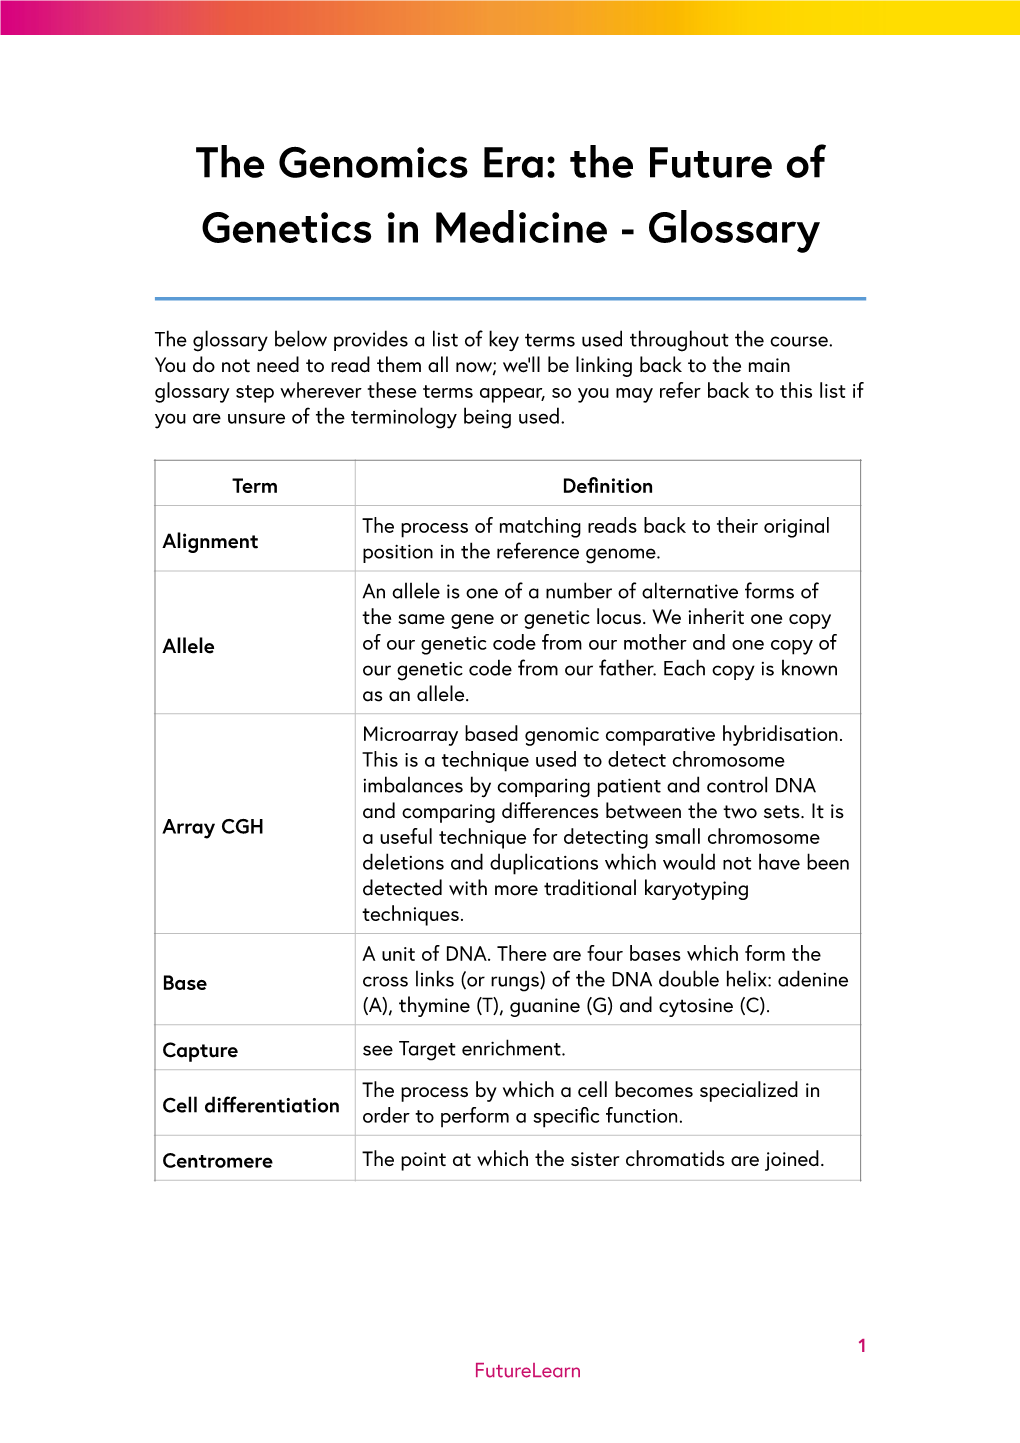 The Genomics Era: the Future of Genetics in Medicine - Glossary